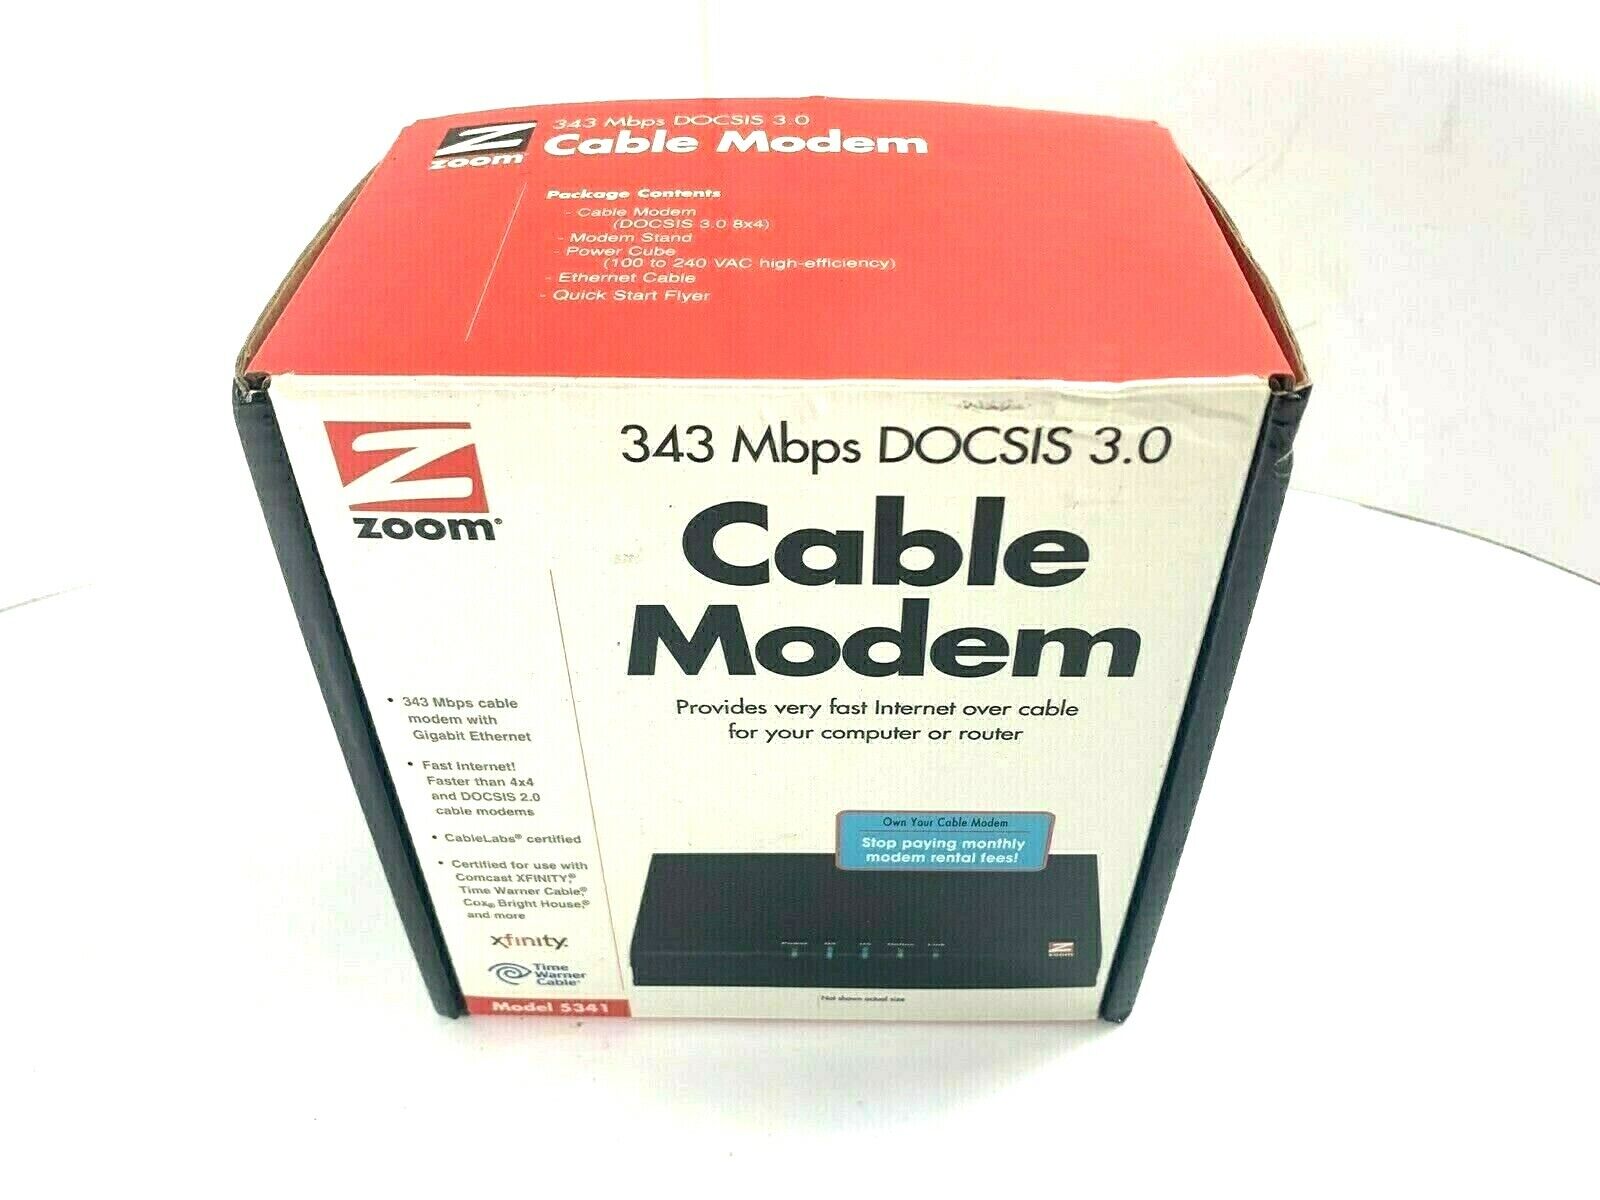 Zoom 343 Mbps DOCSIS 3.0 Cable Modem Model: 5341.